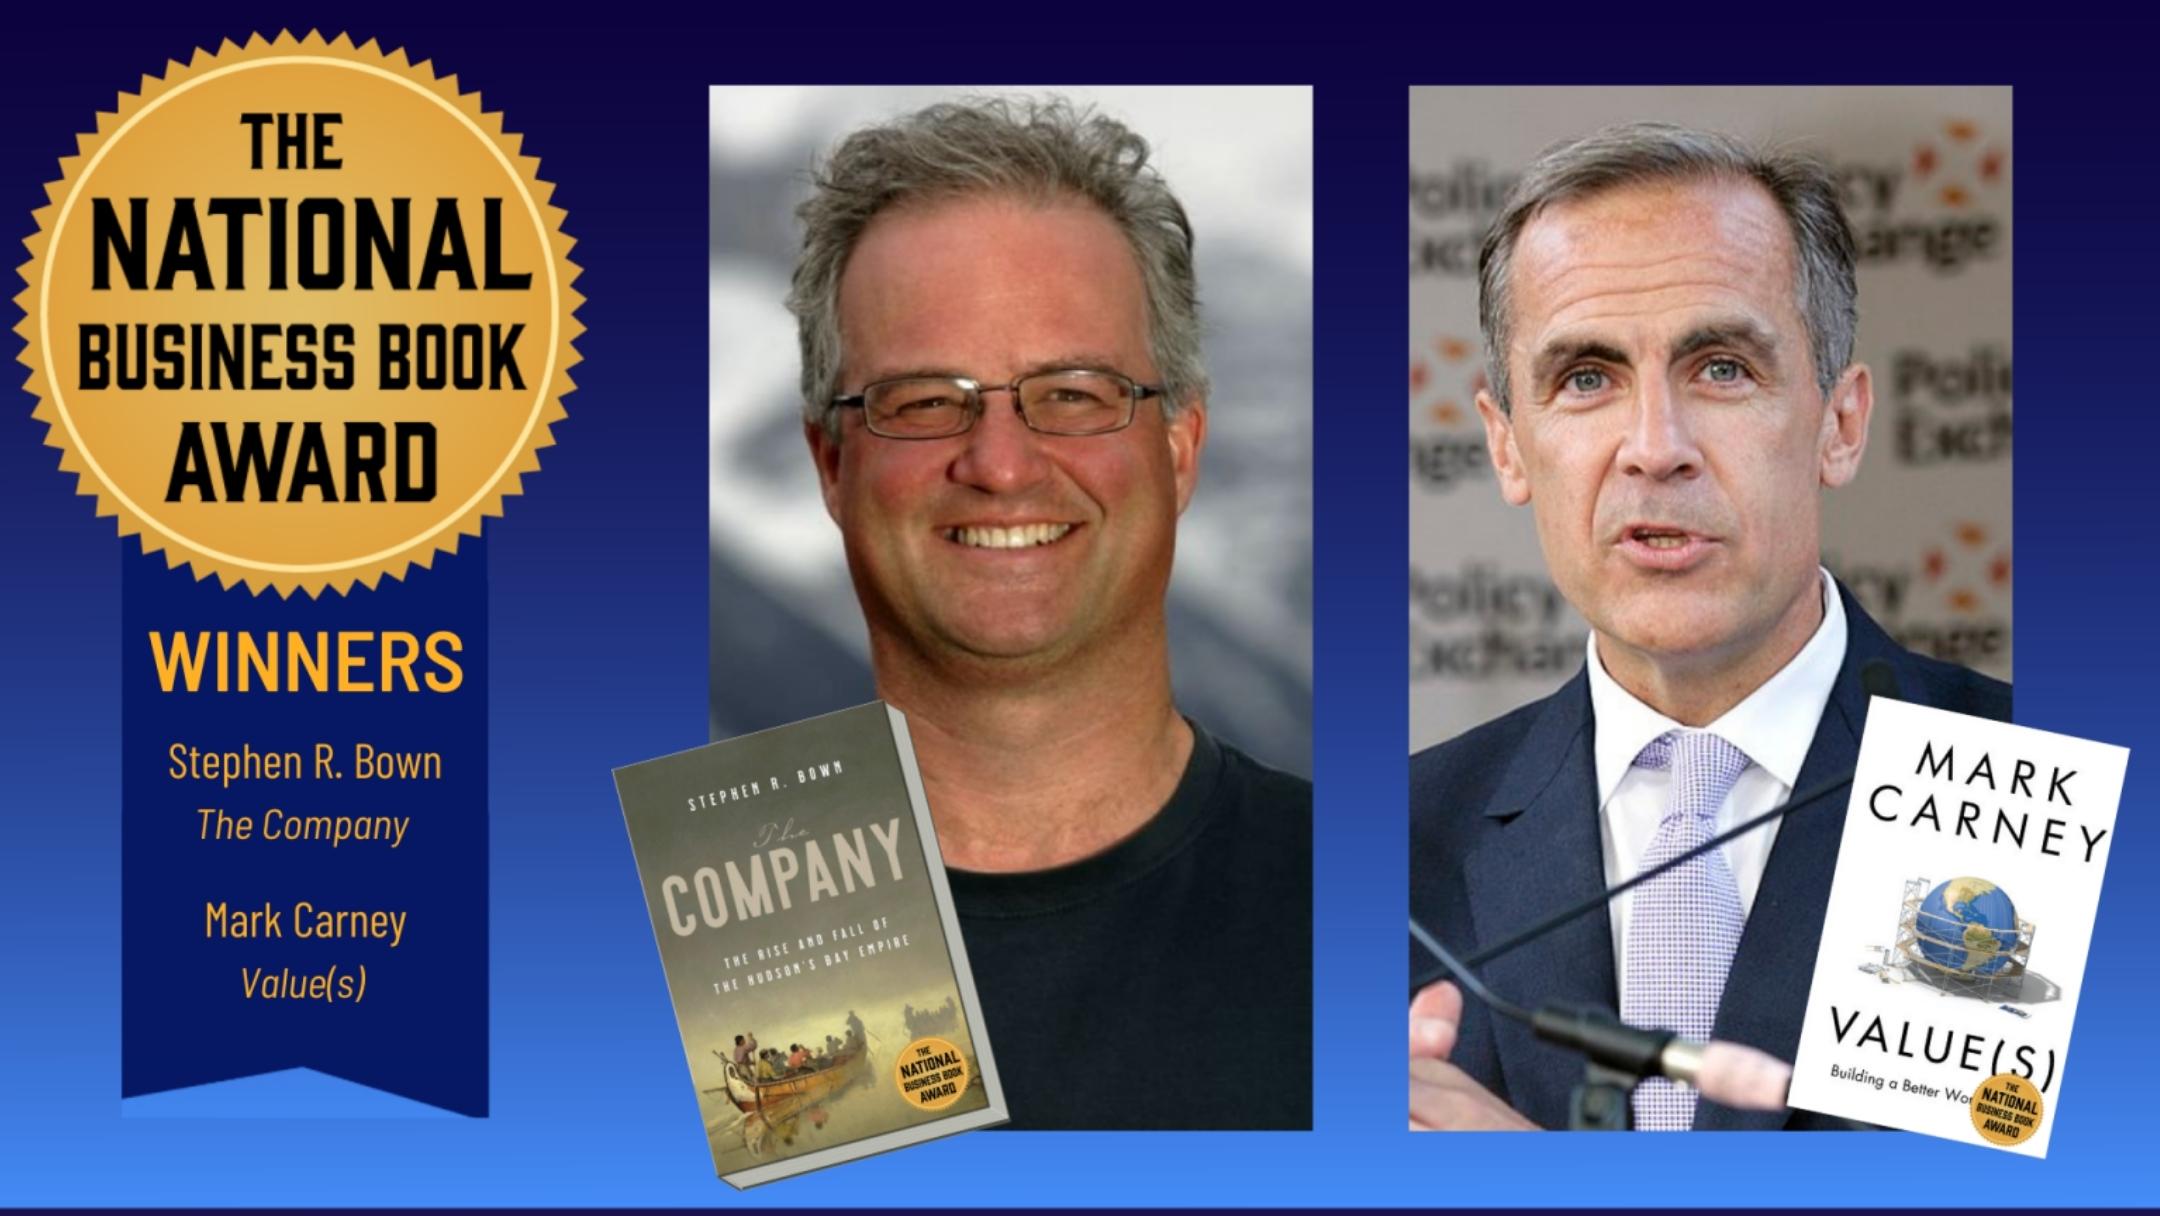 Stephen R. Bown & Mark Carney win 2021 National Business Book Award